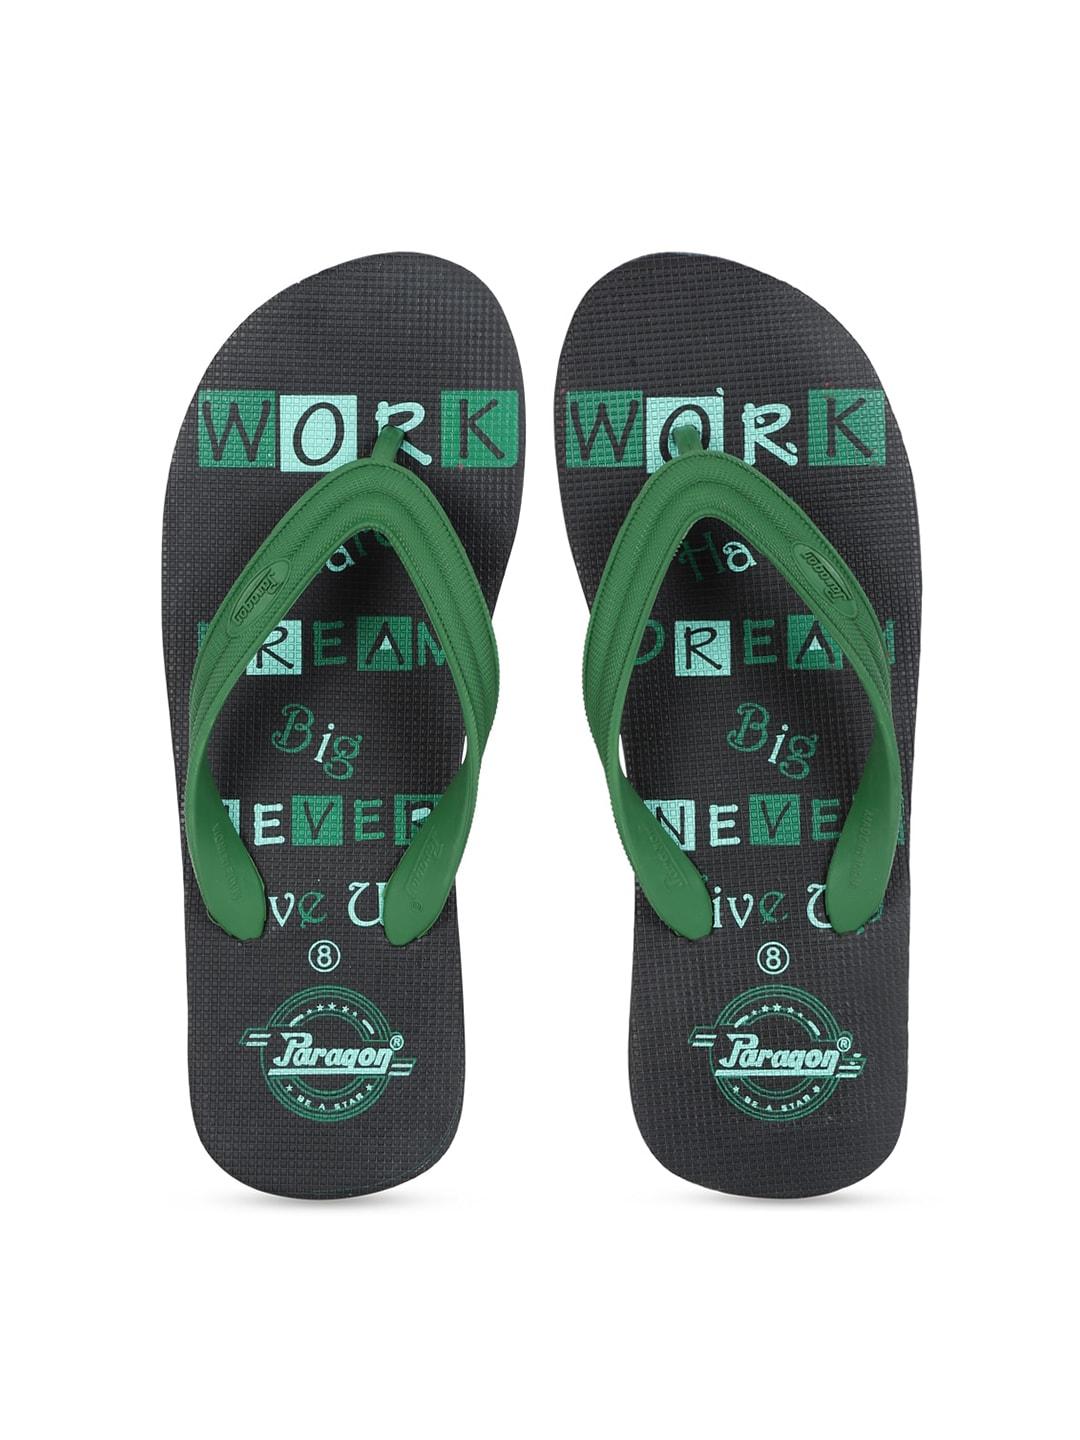 paragon-men-green-&-black-printed-rubber-thong-flip-flops